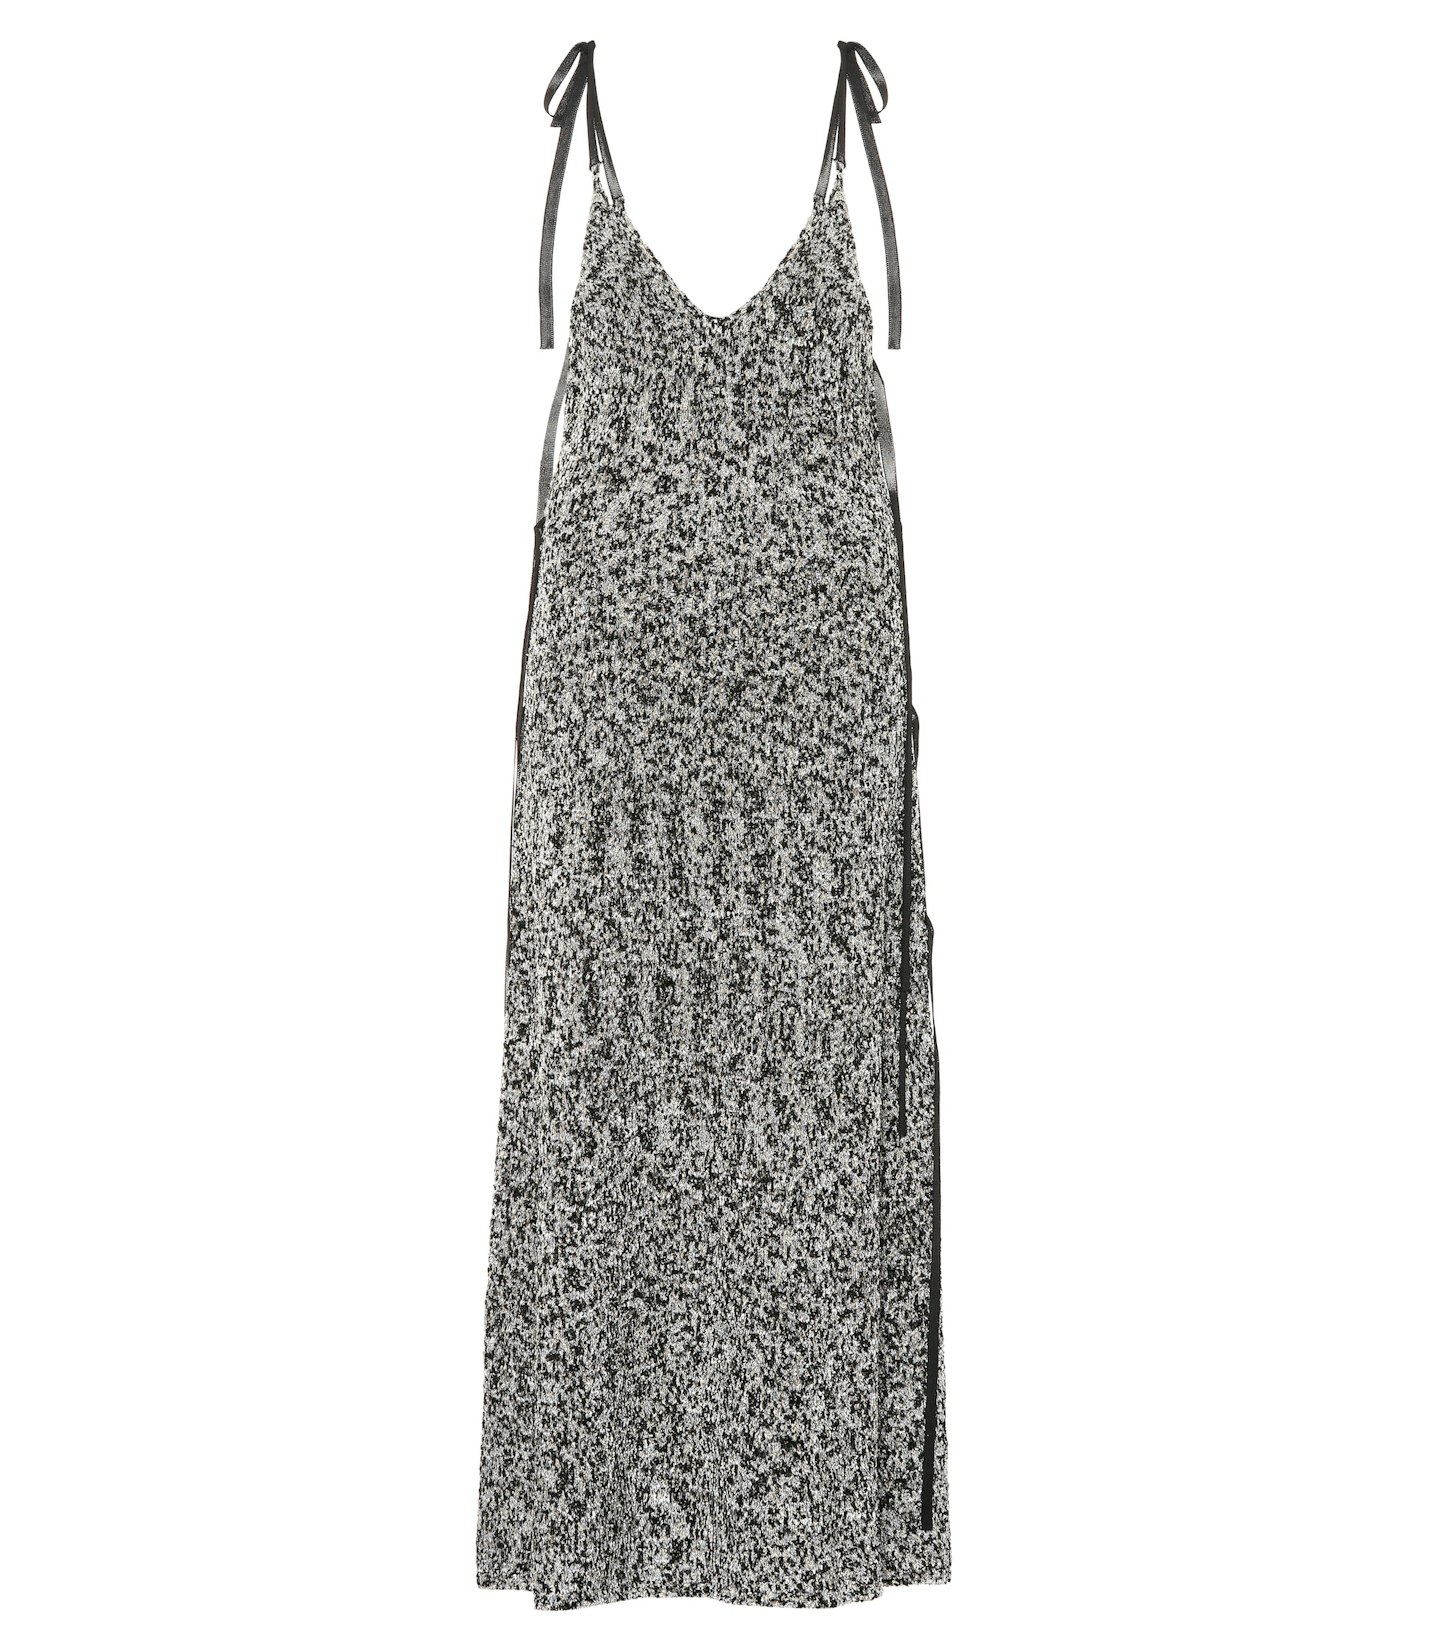 Loewe, Lurex Knit Maxi Dress, £850, Mytheresa